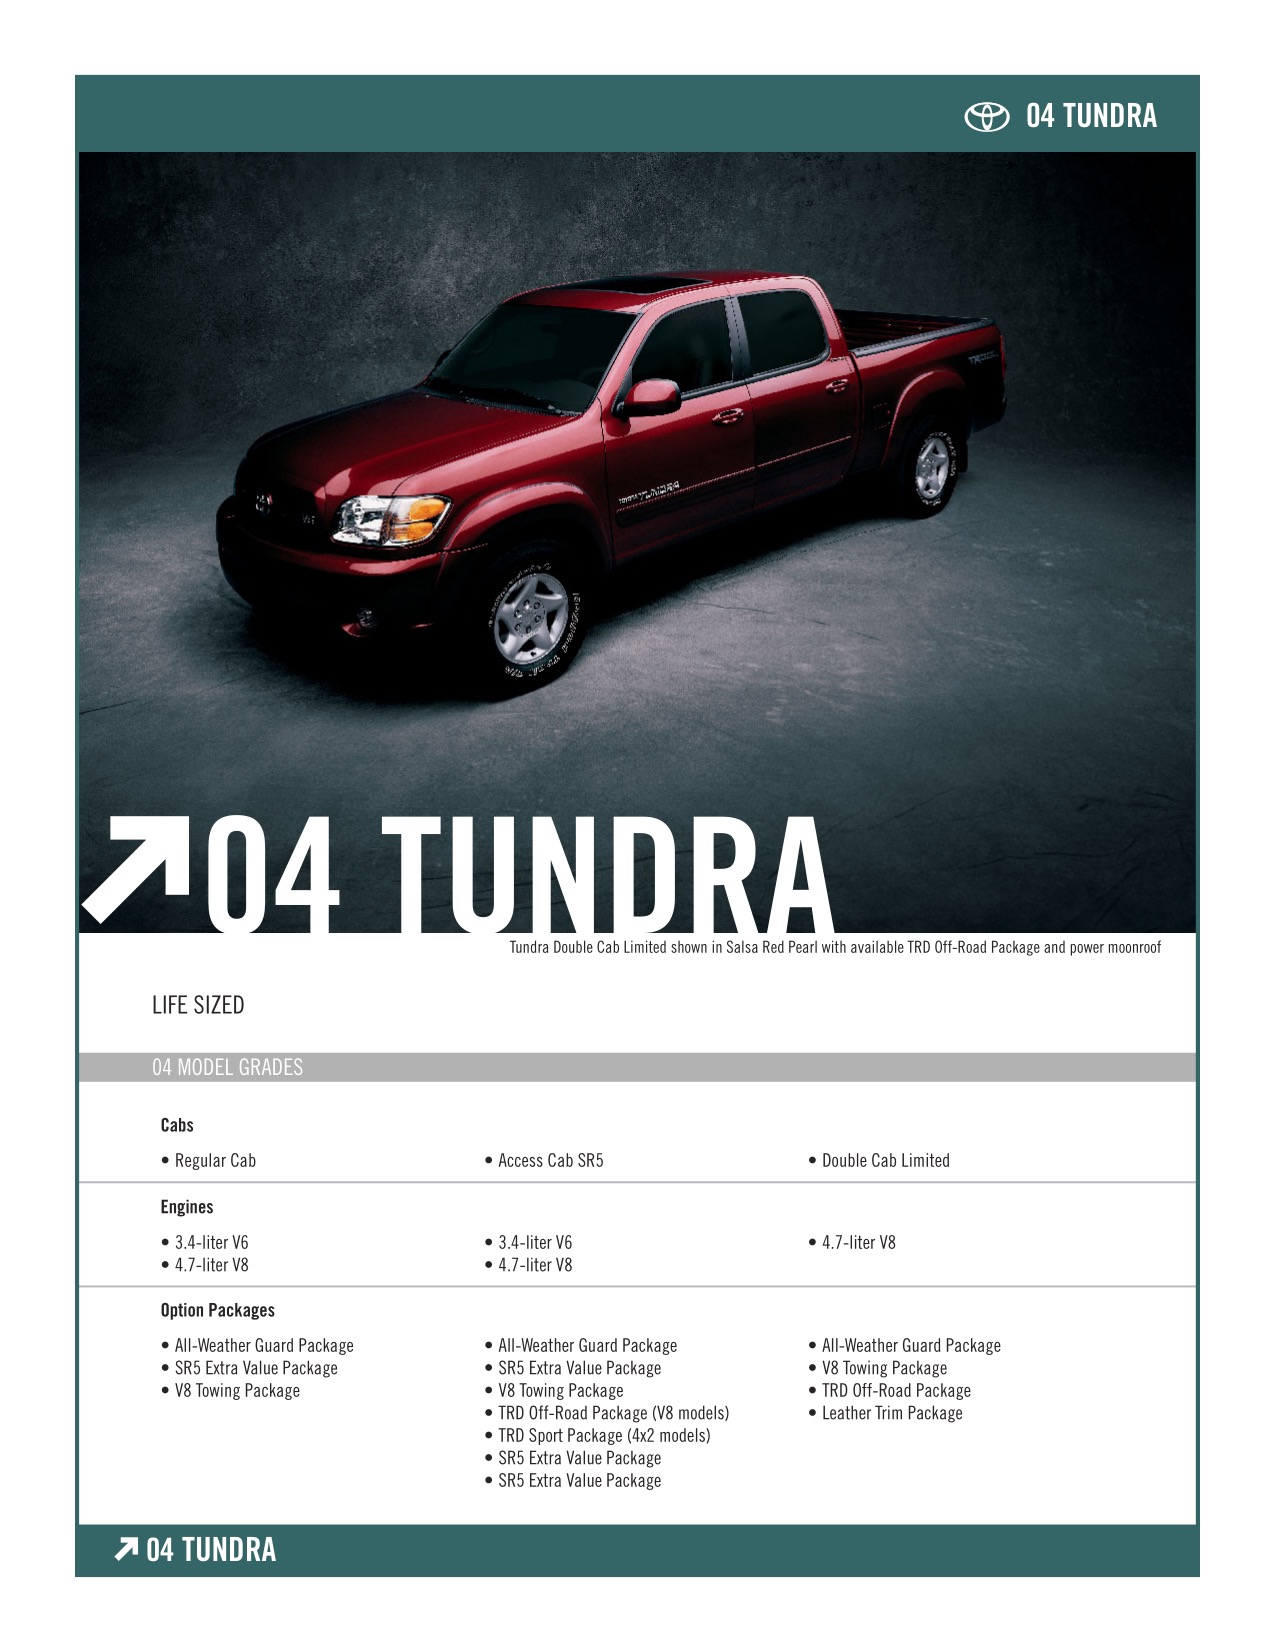 2004 Toyota Tundra Brochure